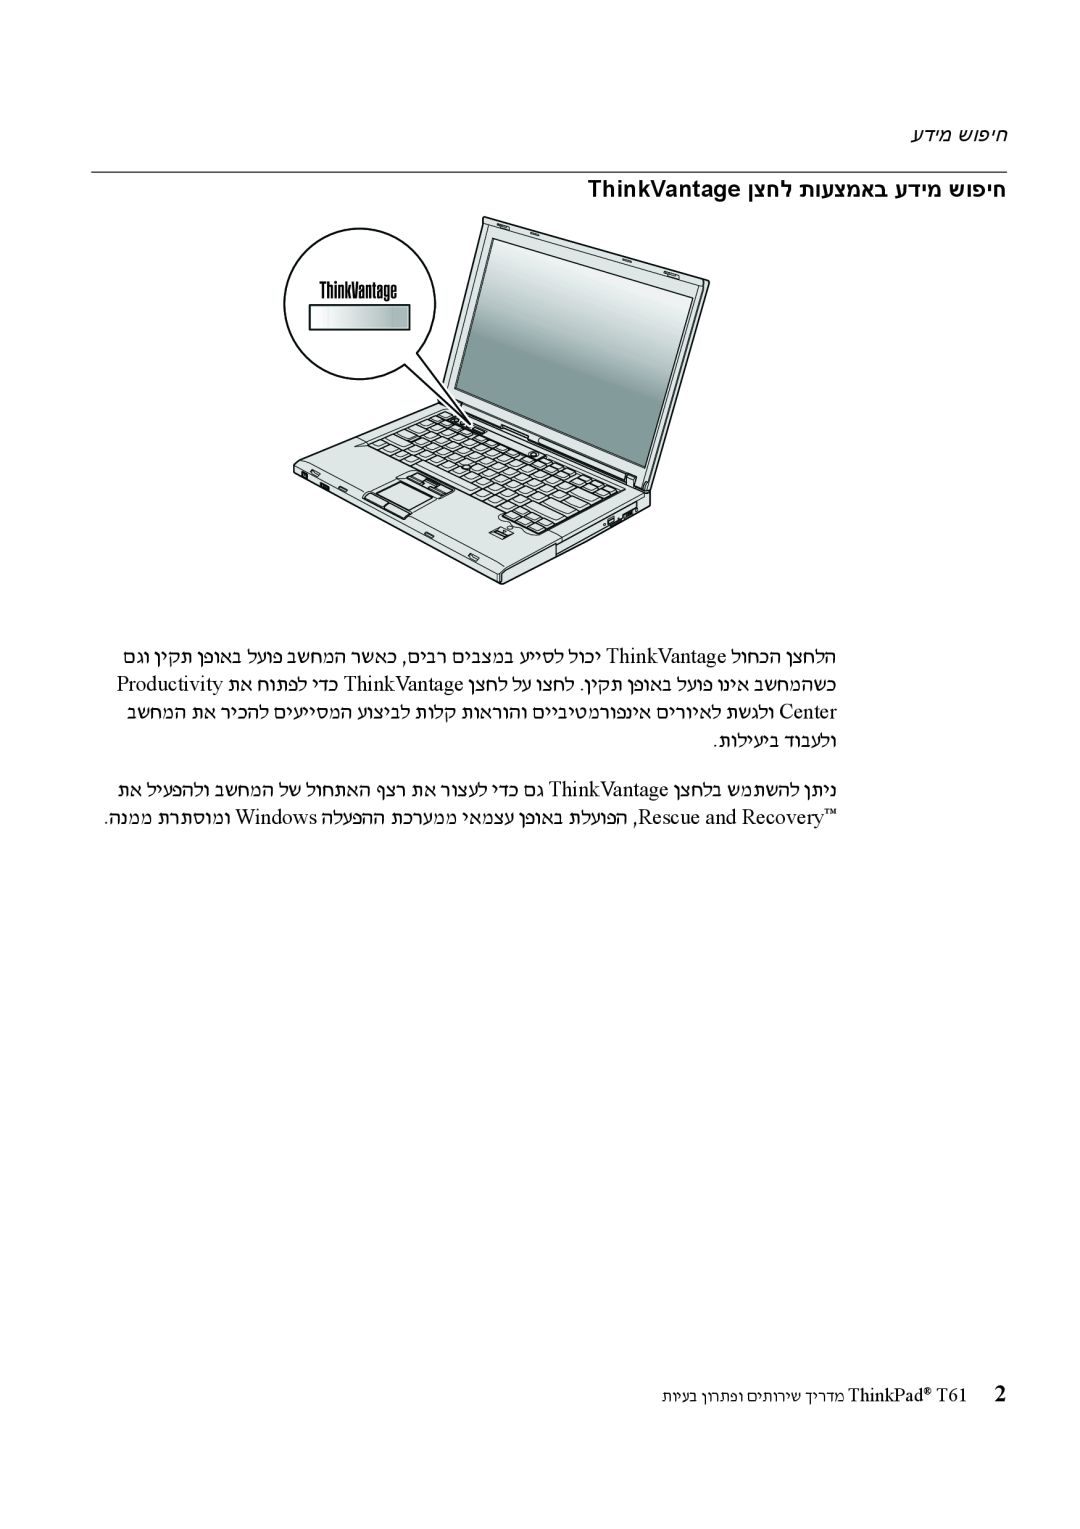 Lenovo T61 manual ThinkVantage ןצחל תועצמאב עדימ שופיח 